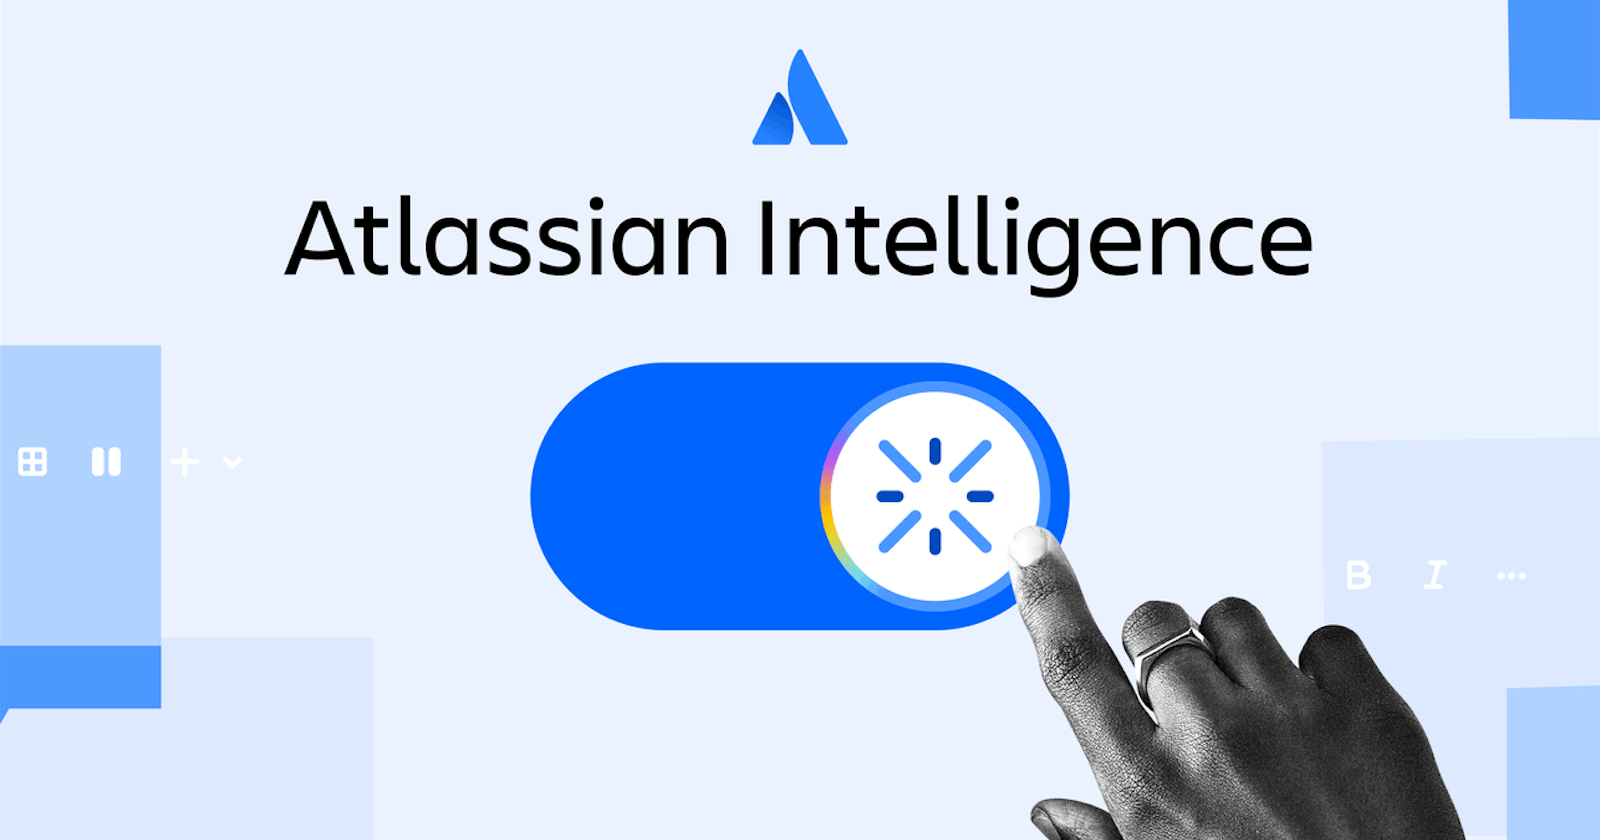 General availability of Atlassian Intelligence